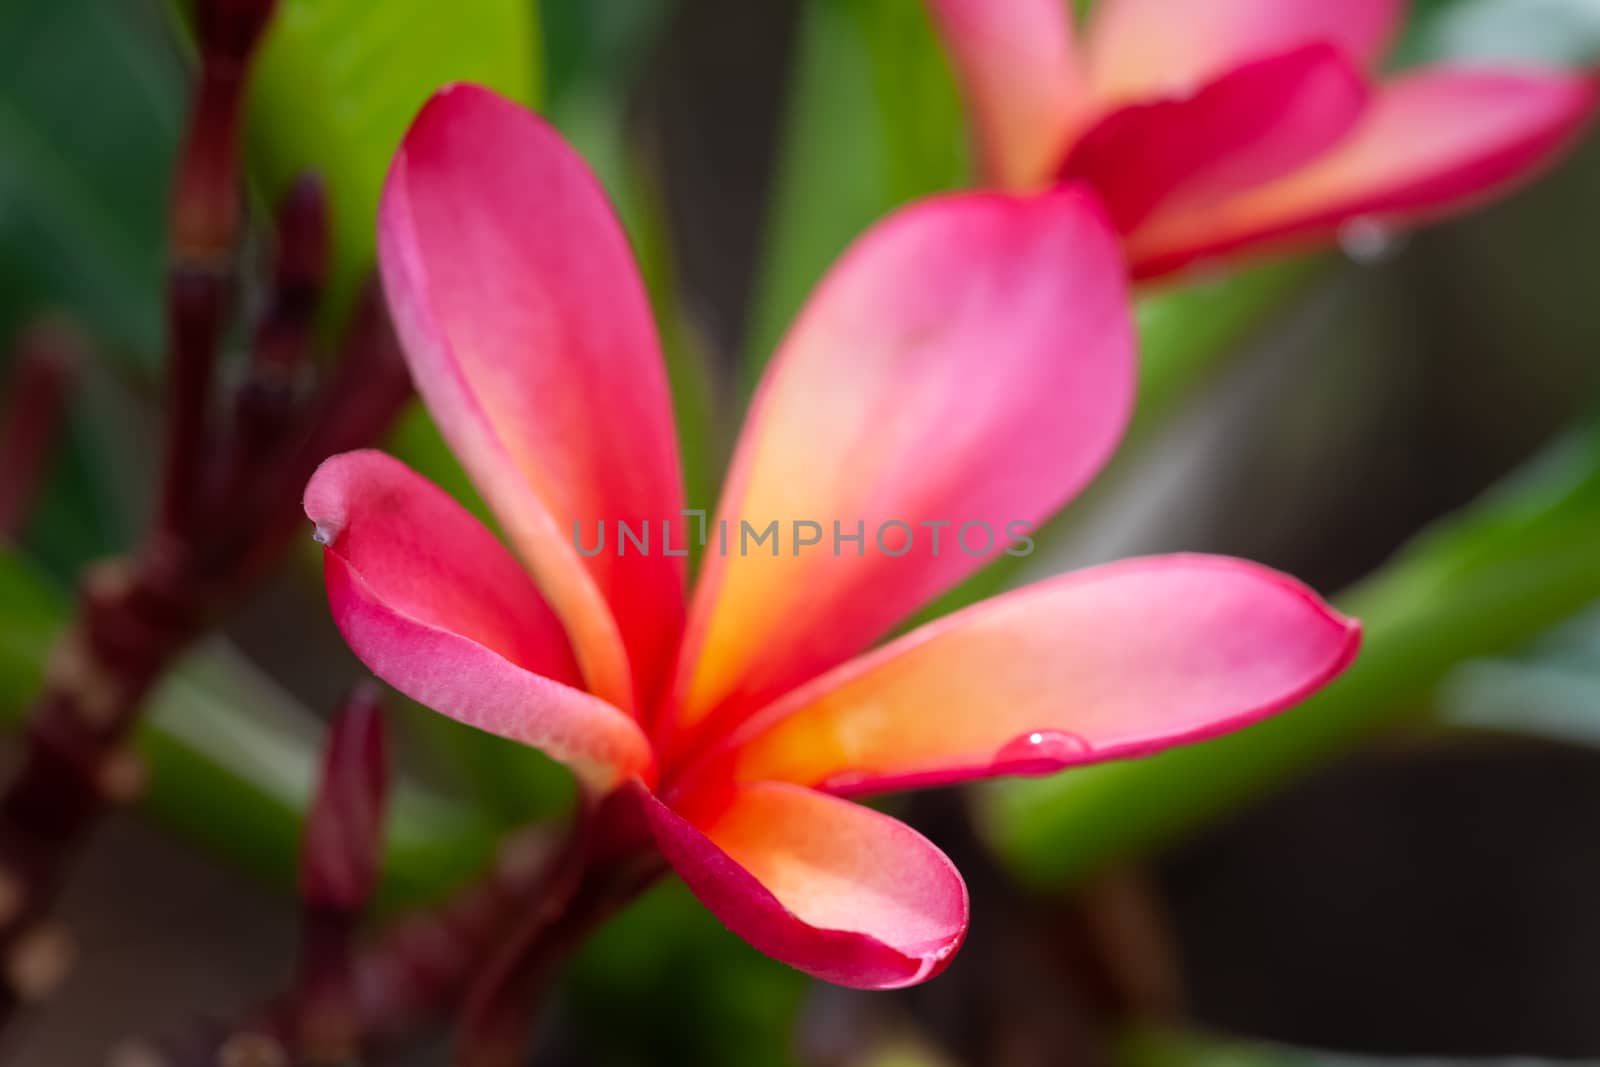 An image of a pink frangipani flower